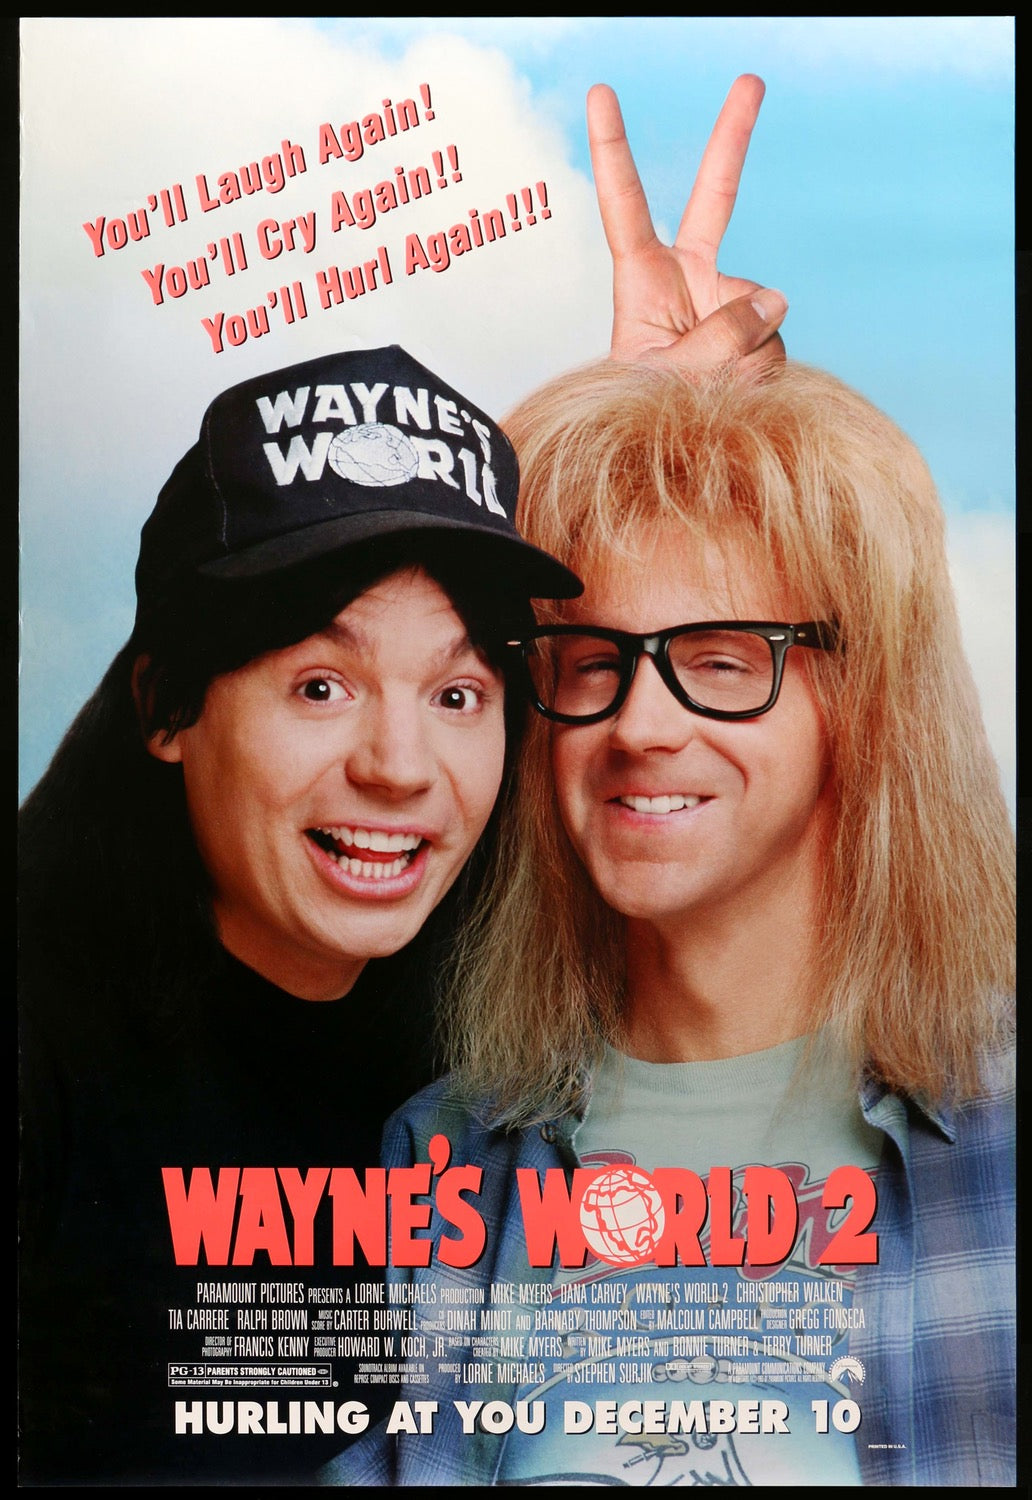 Wayne's World 2 (1993) original movie poster for sale at Original Film Art